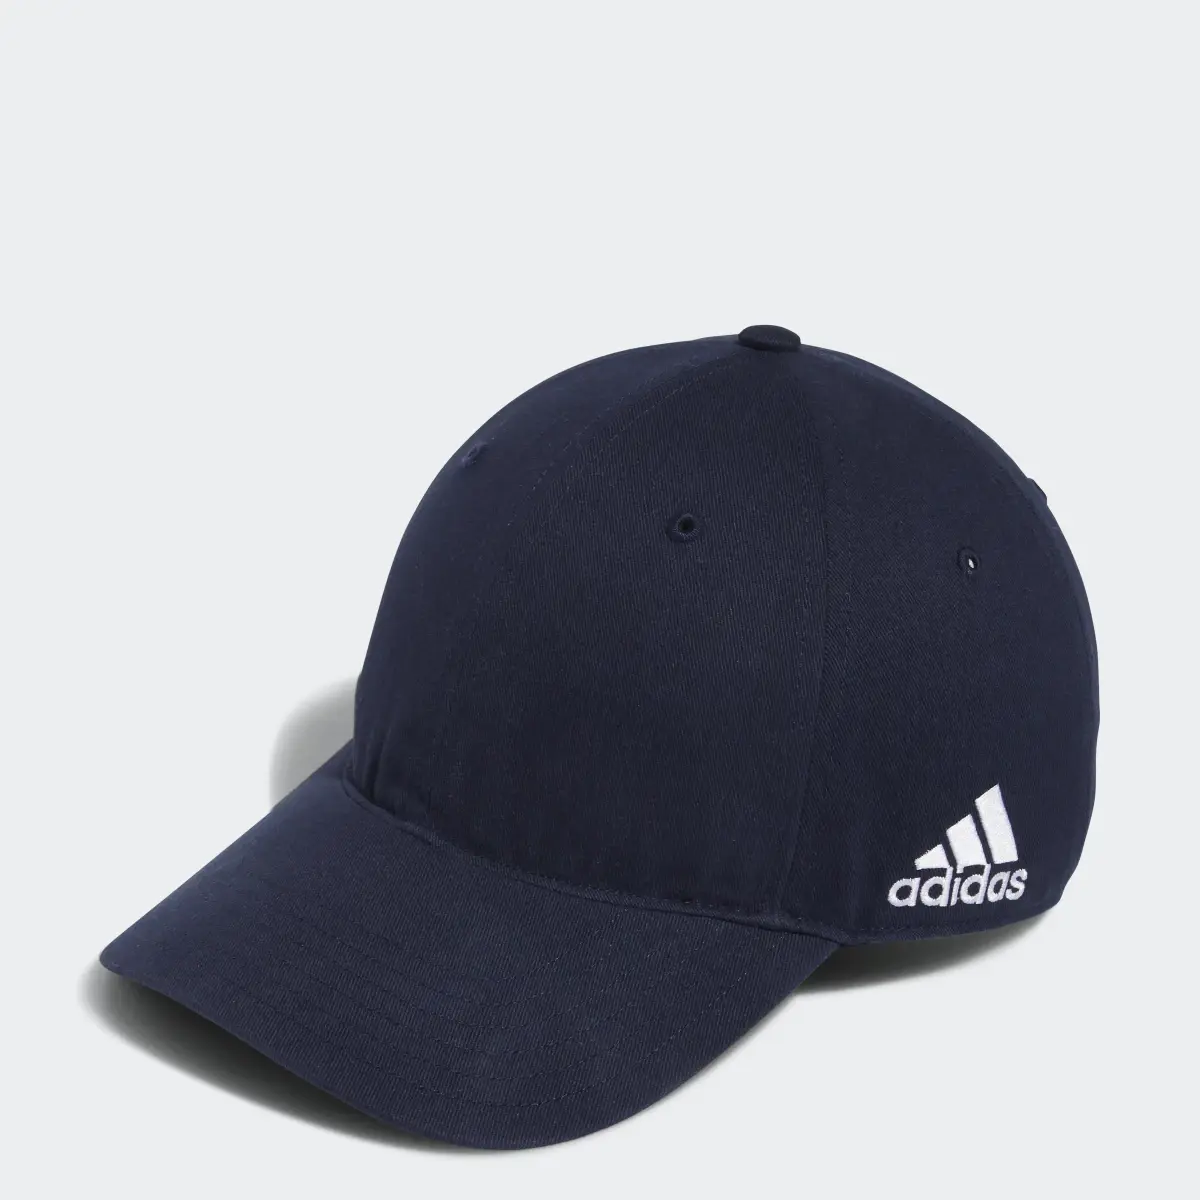 Adidas Cotton Front Crestable Hat. 1